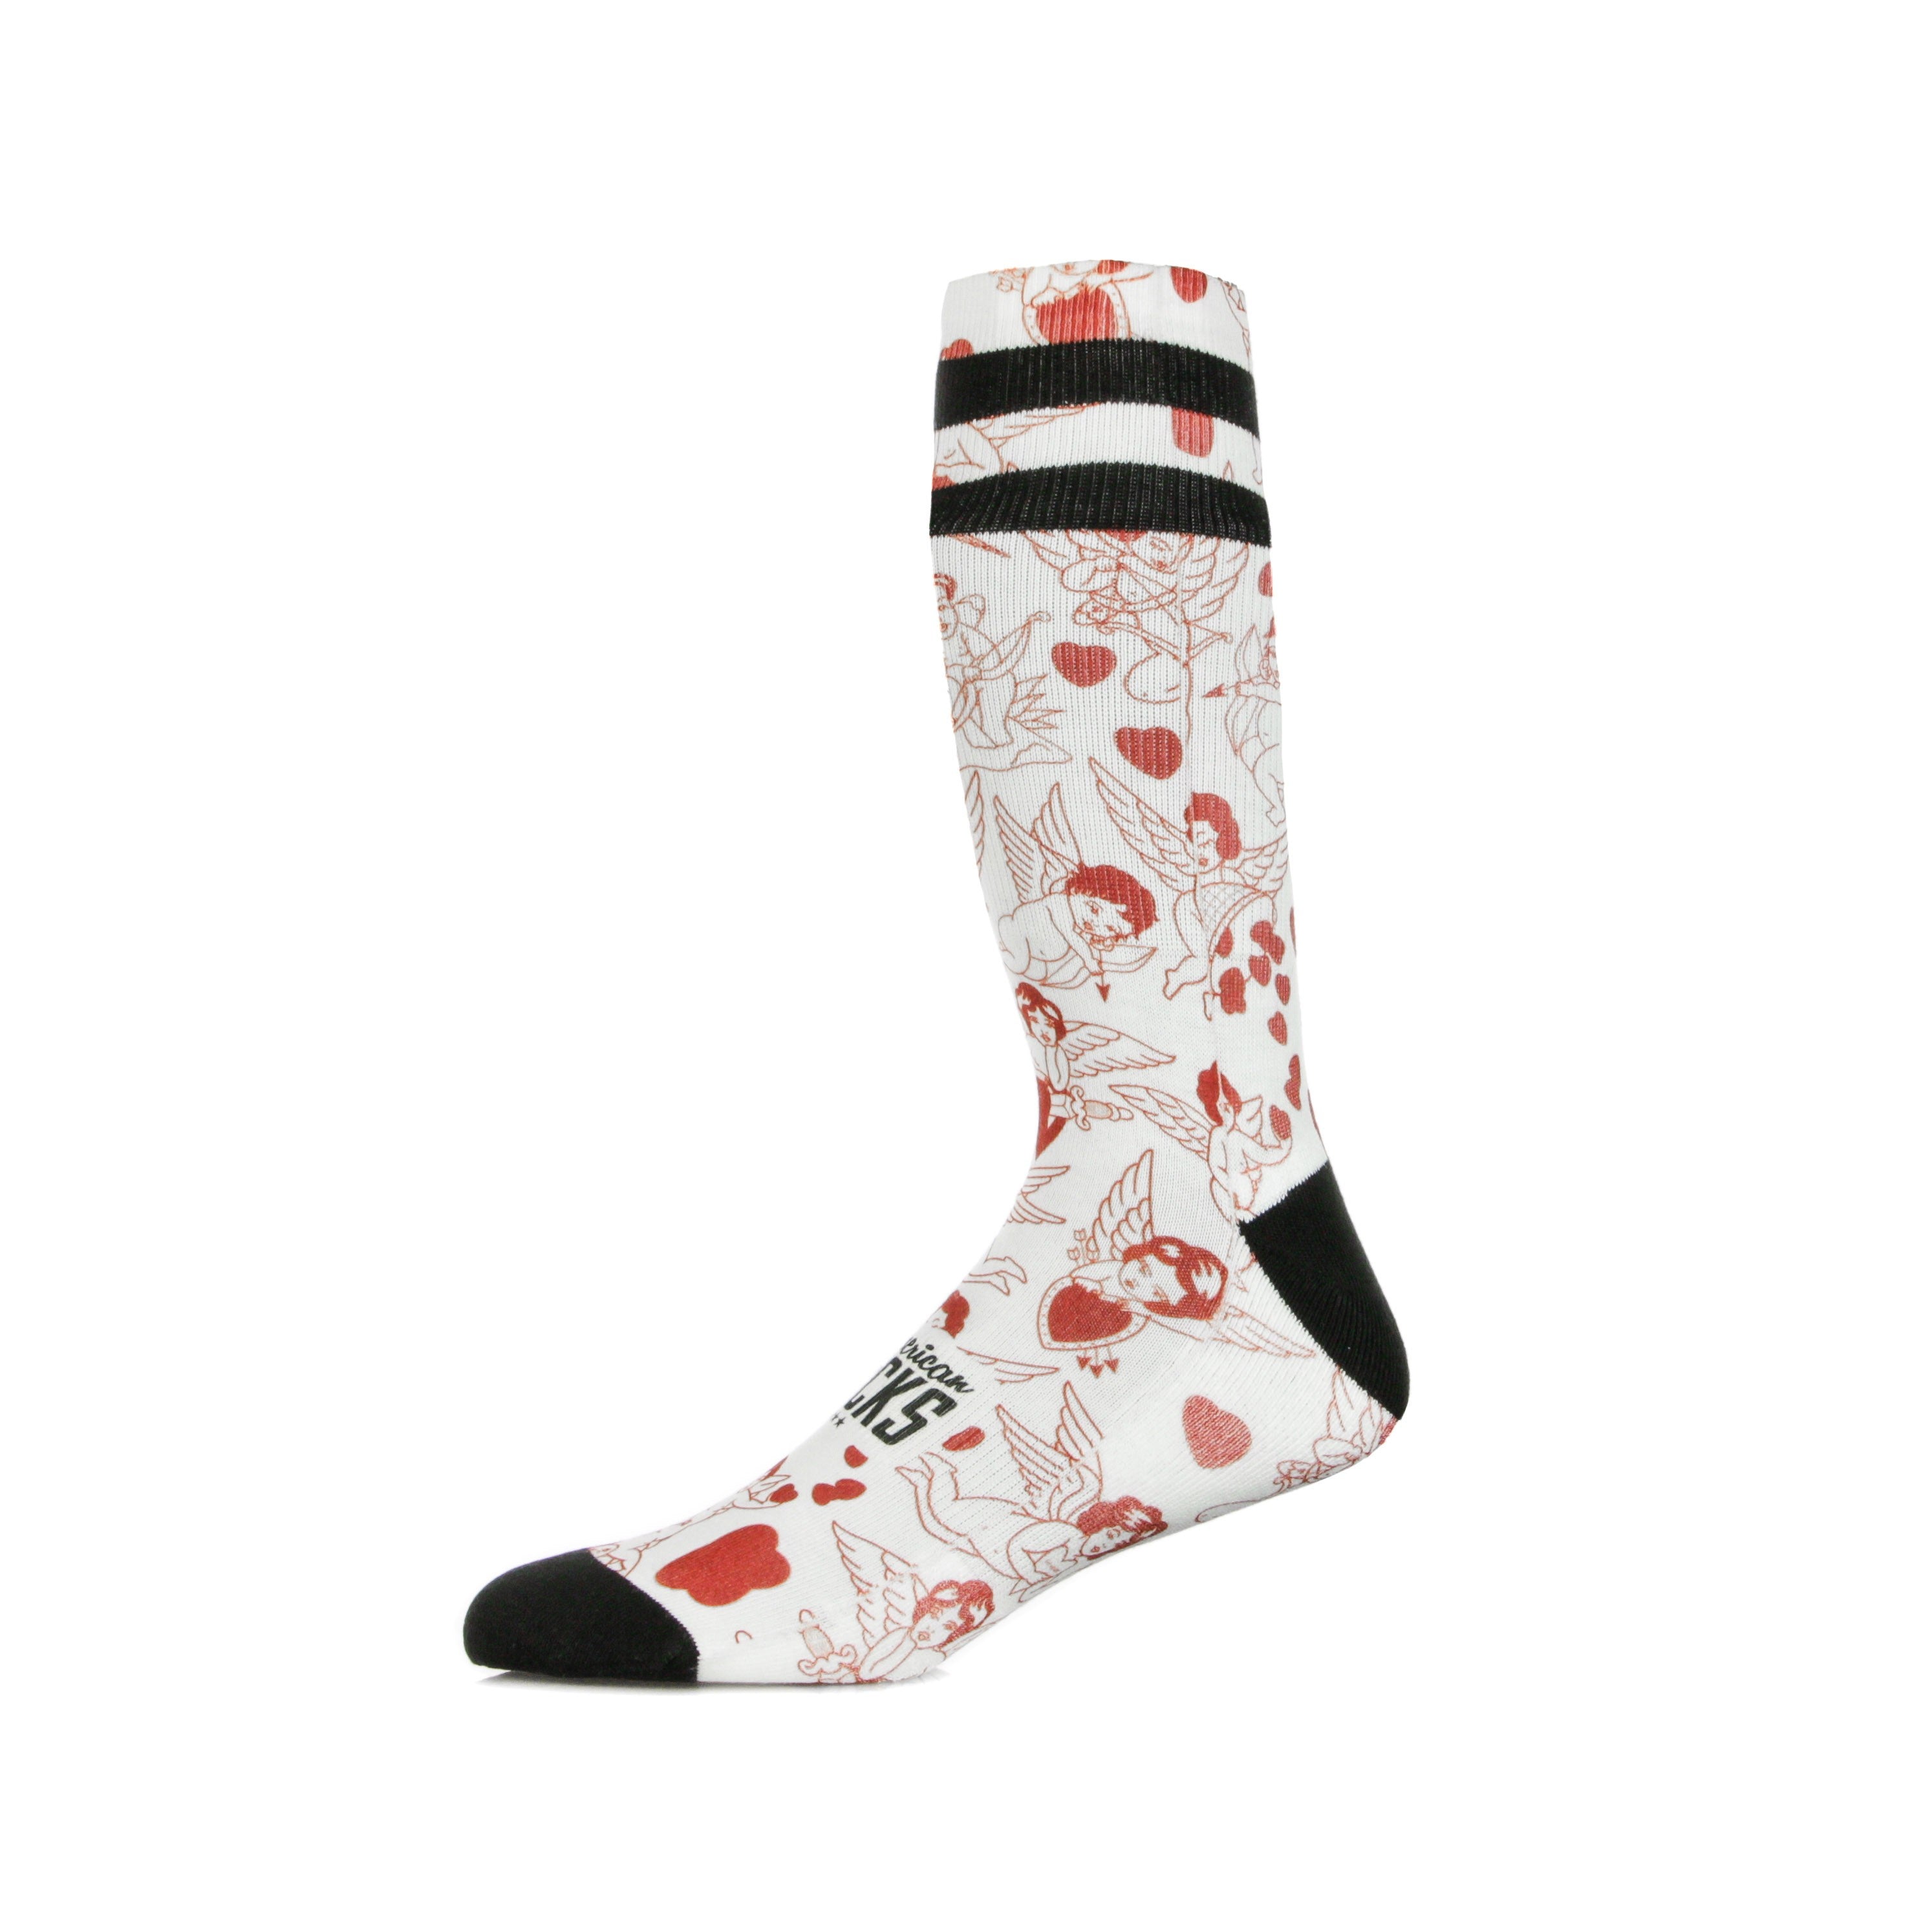 American Socks, Calza Media Uomo Valentine, White/red